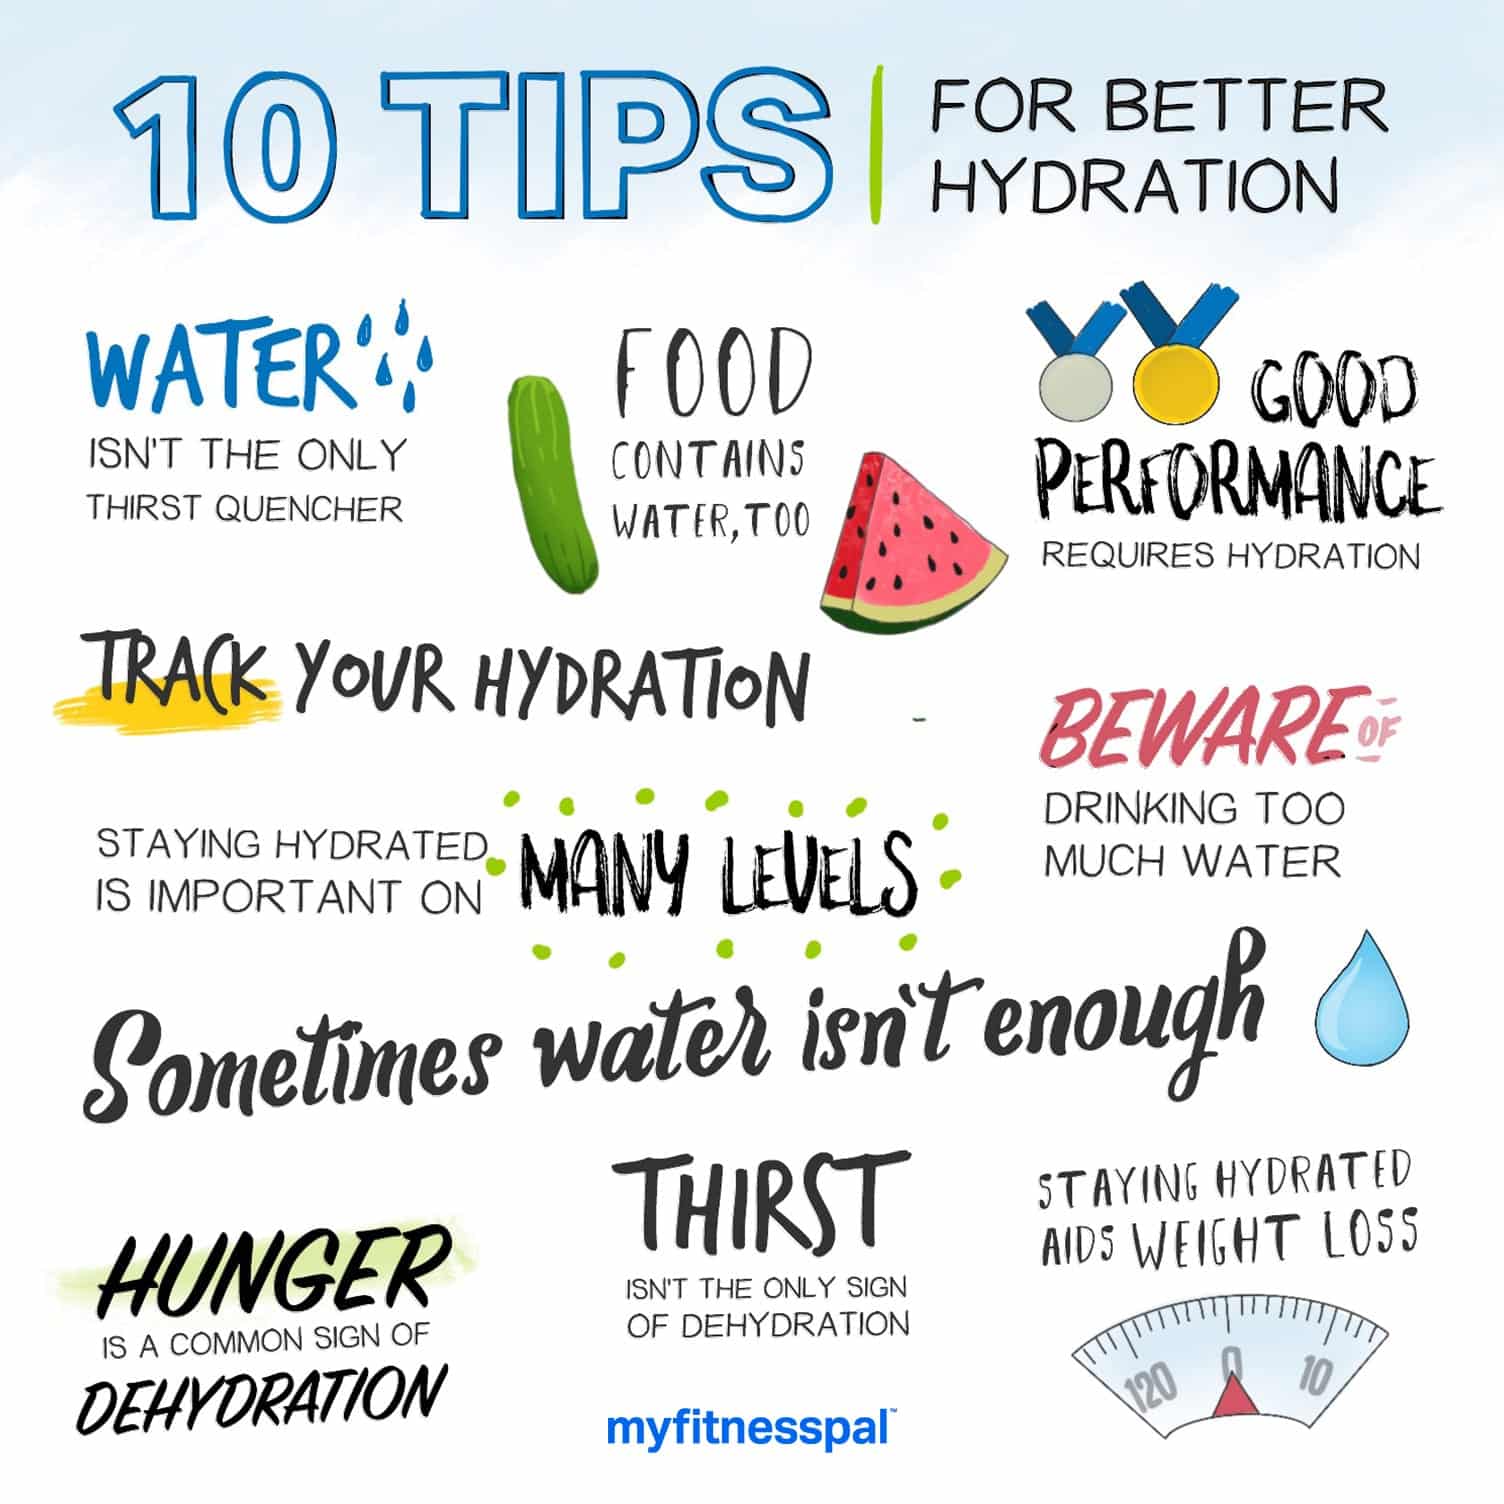 Hydration strategies